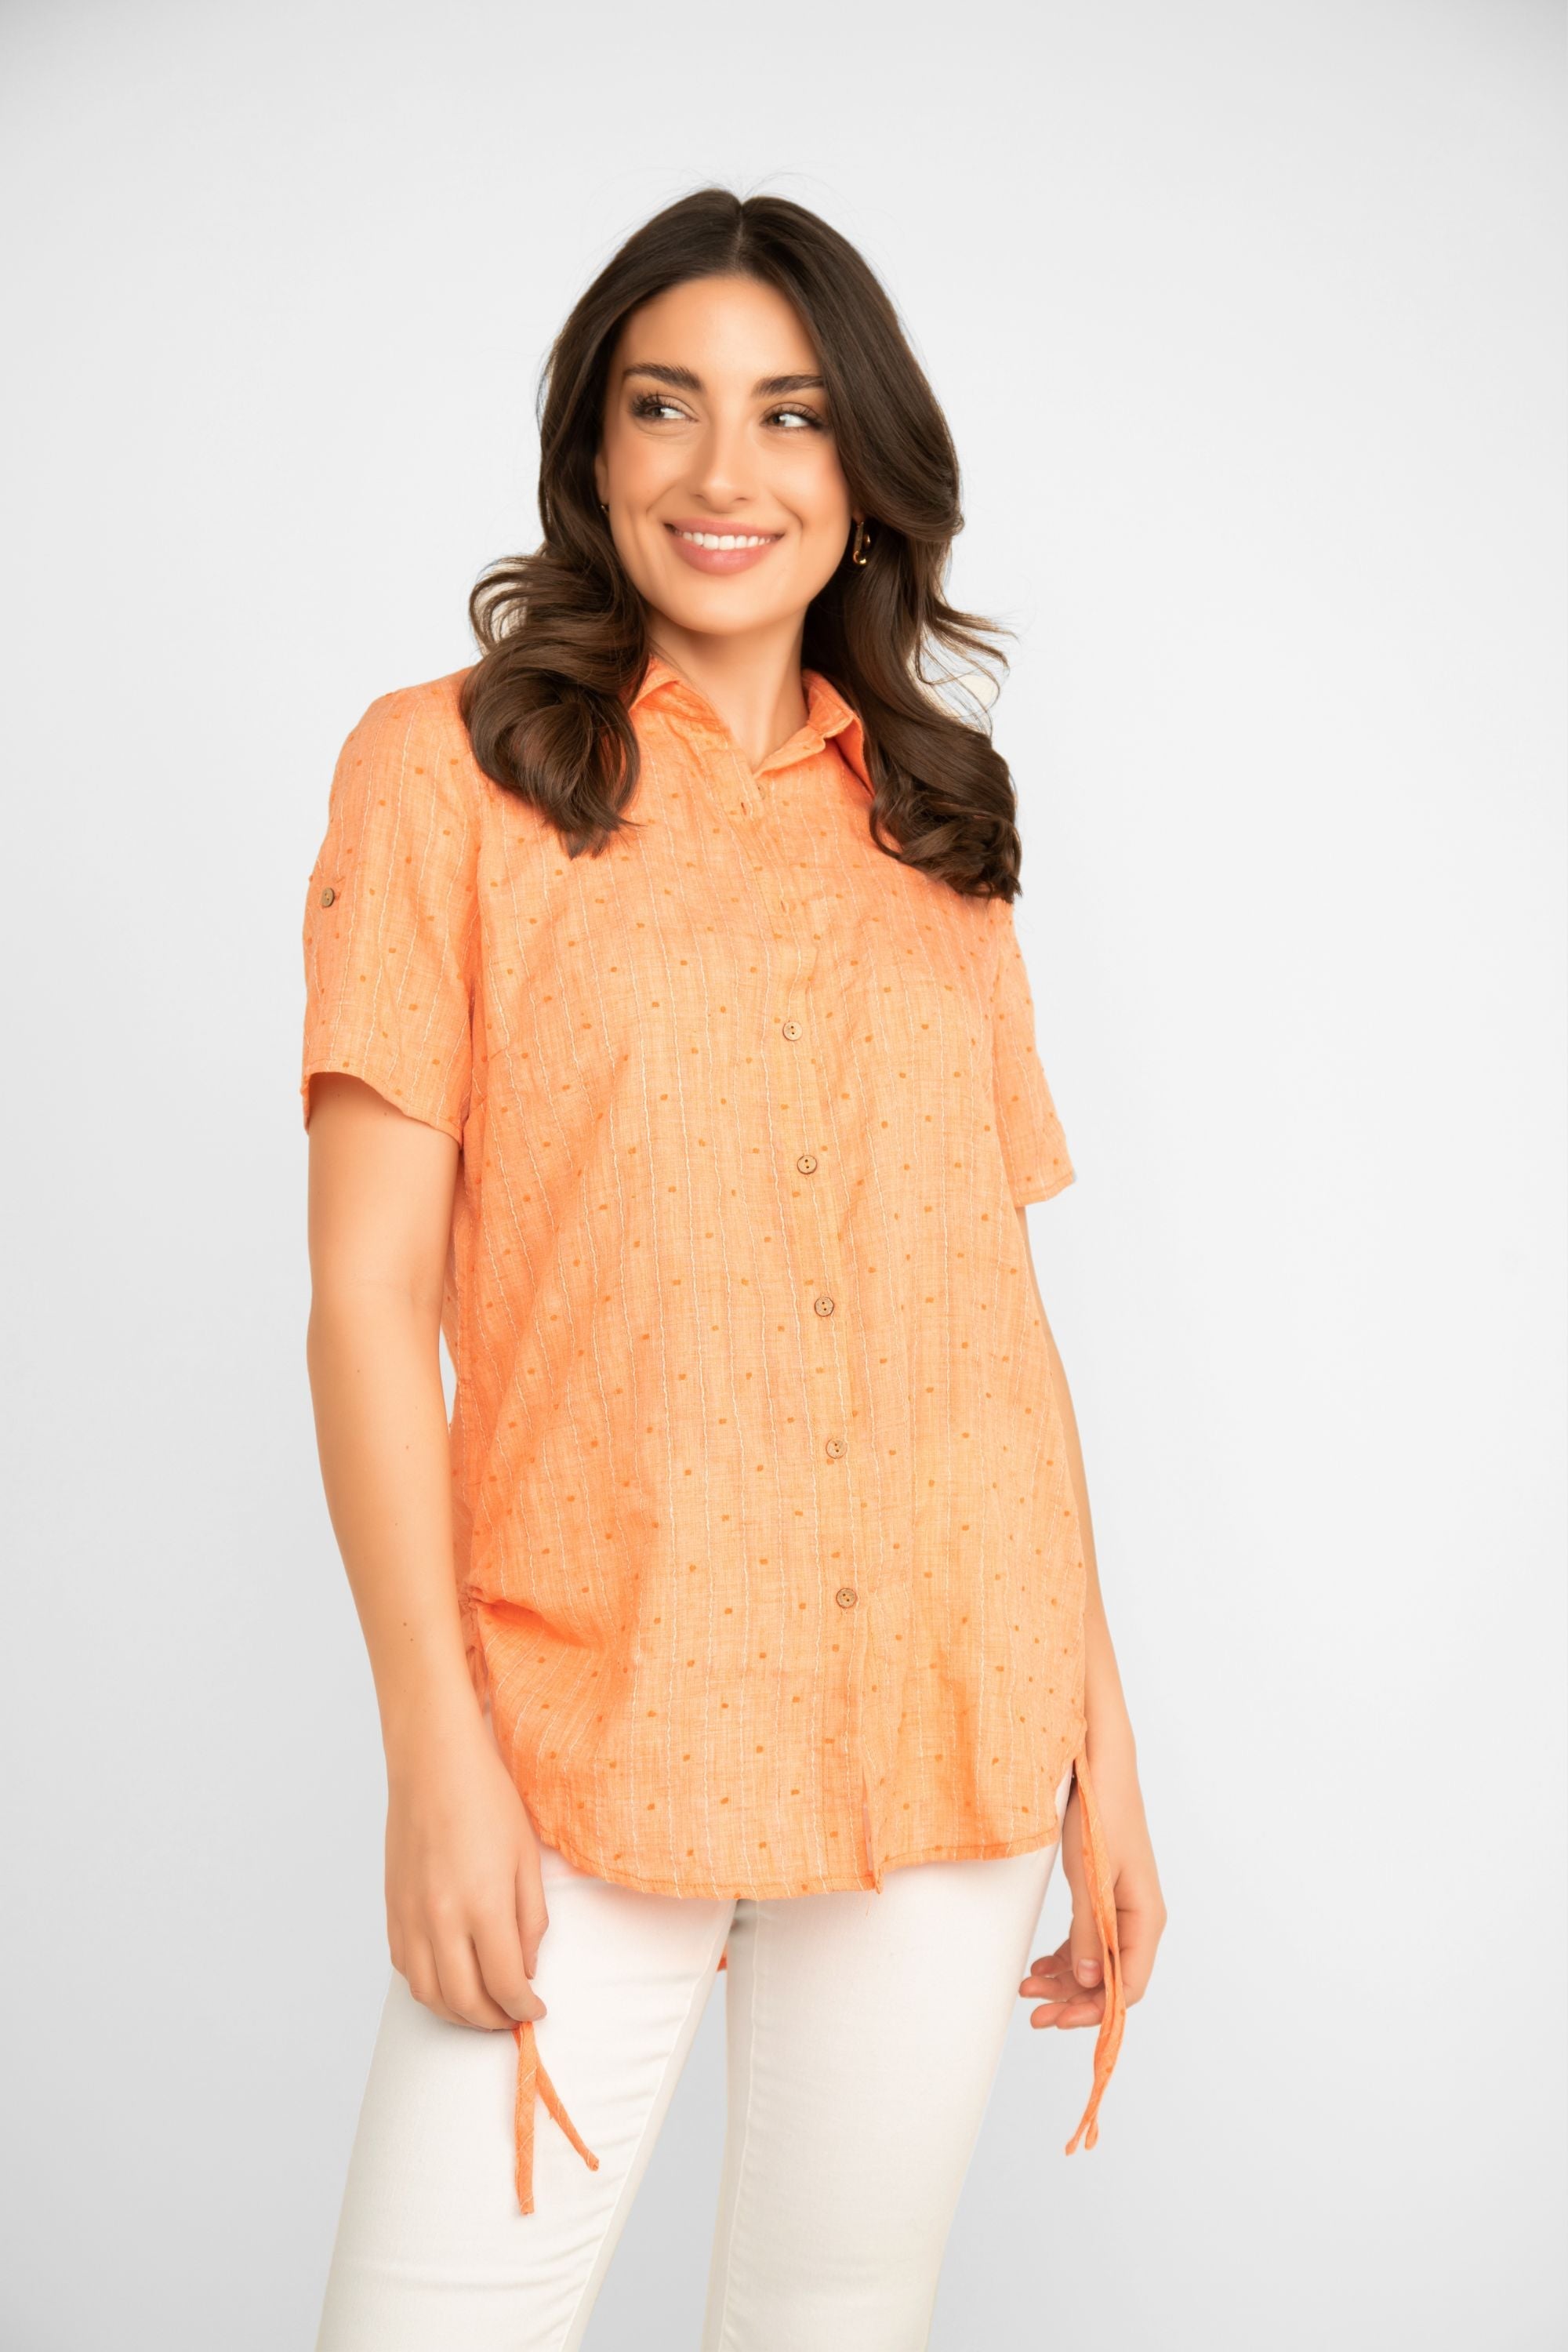 Women's Clothing ALISON SHERI (A41018) Short Sleeve Button Front Shirt in ORANGE